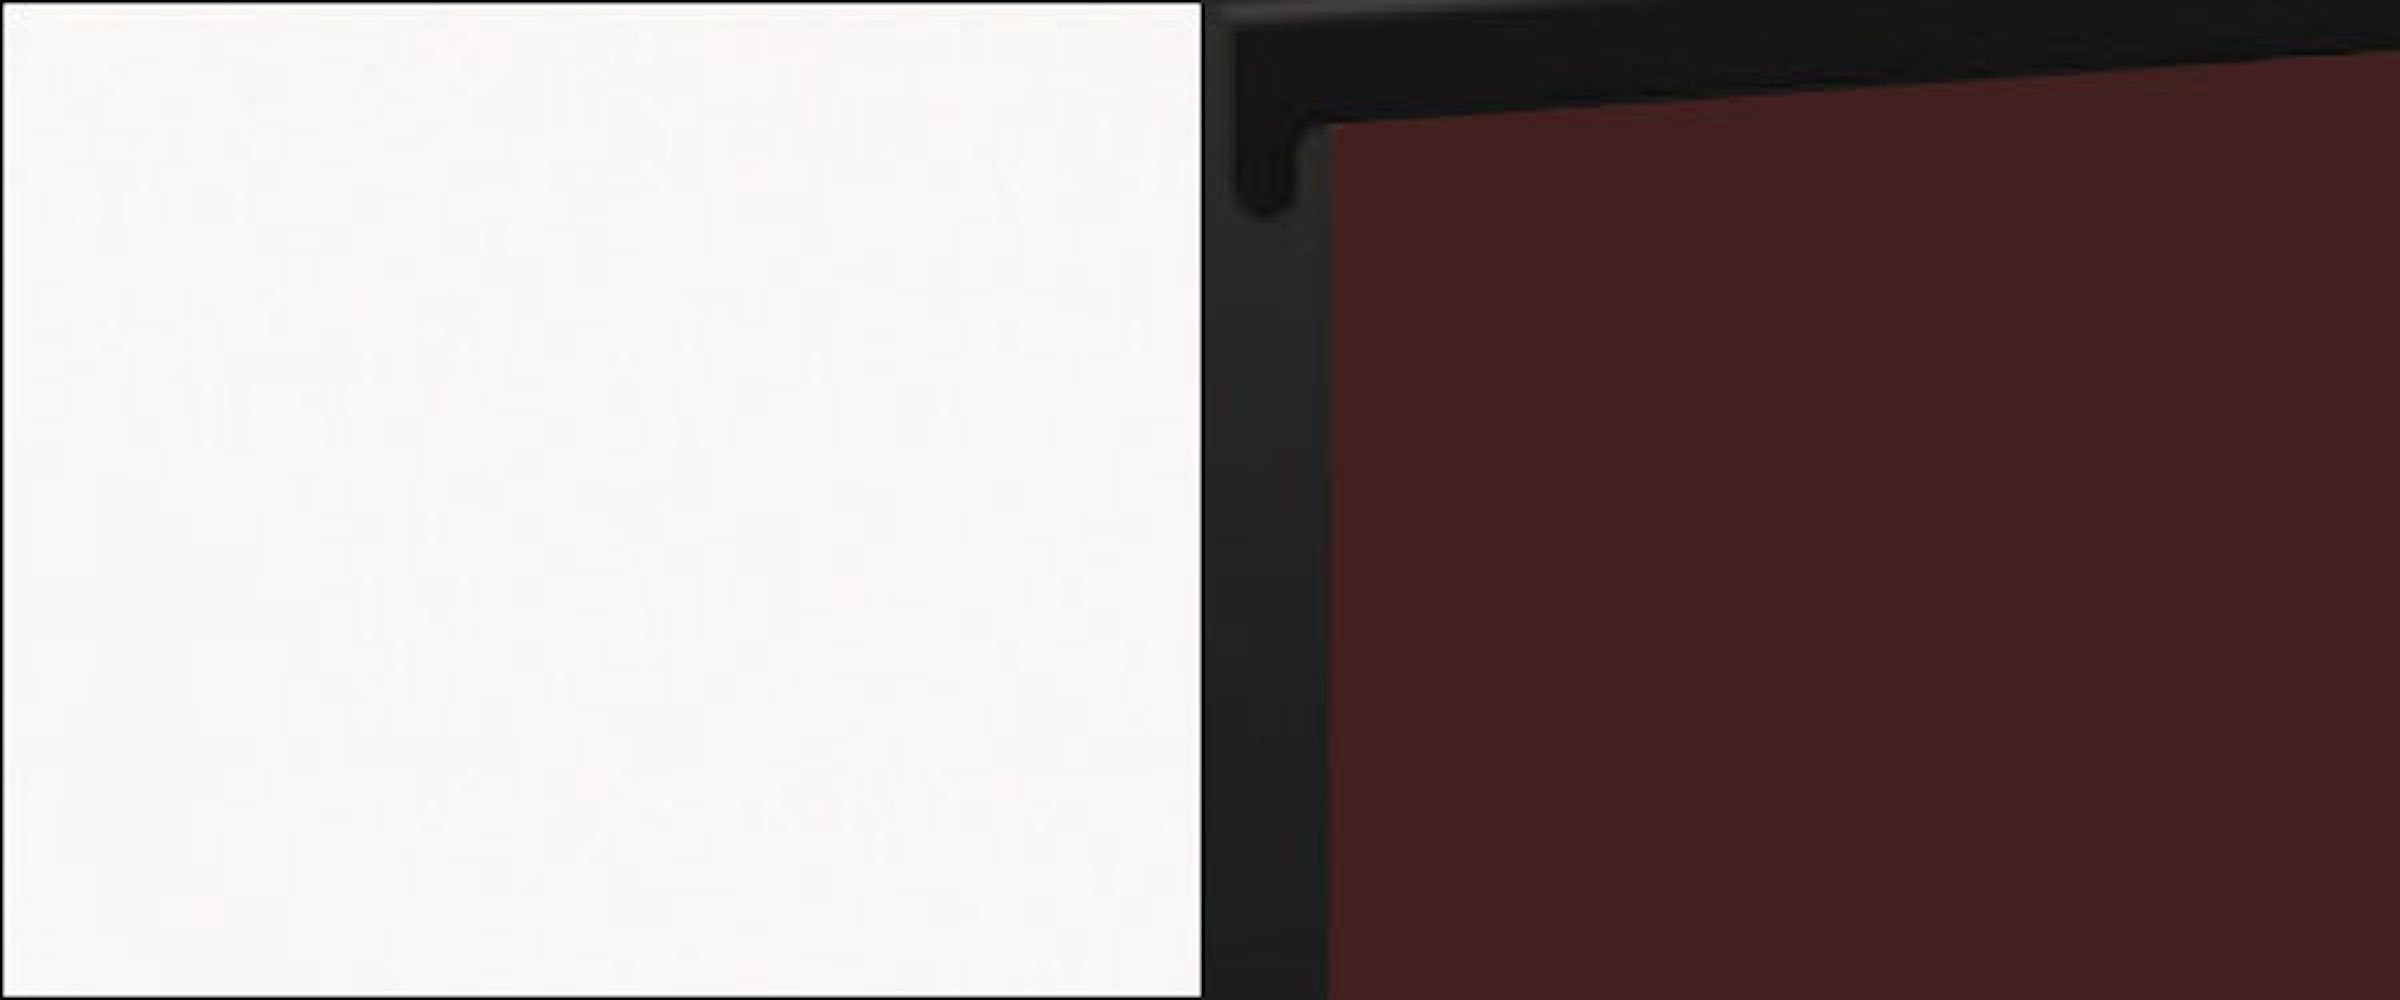 60cm & 1 (Vollauszug) wählbar Schublade Front- Feldmann-Wohnen matt Korpusfarbe rubinrot super Spülenunterschrank Velden grifflos